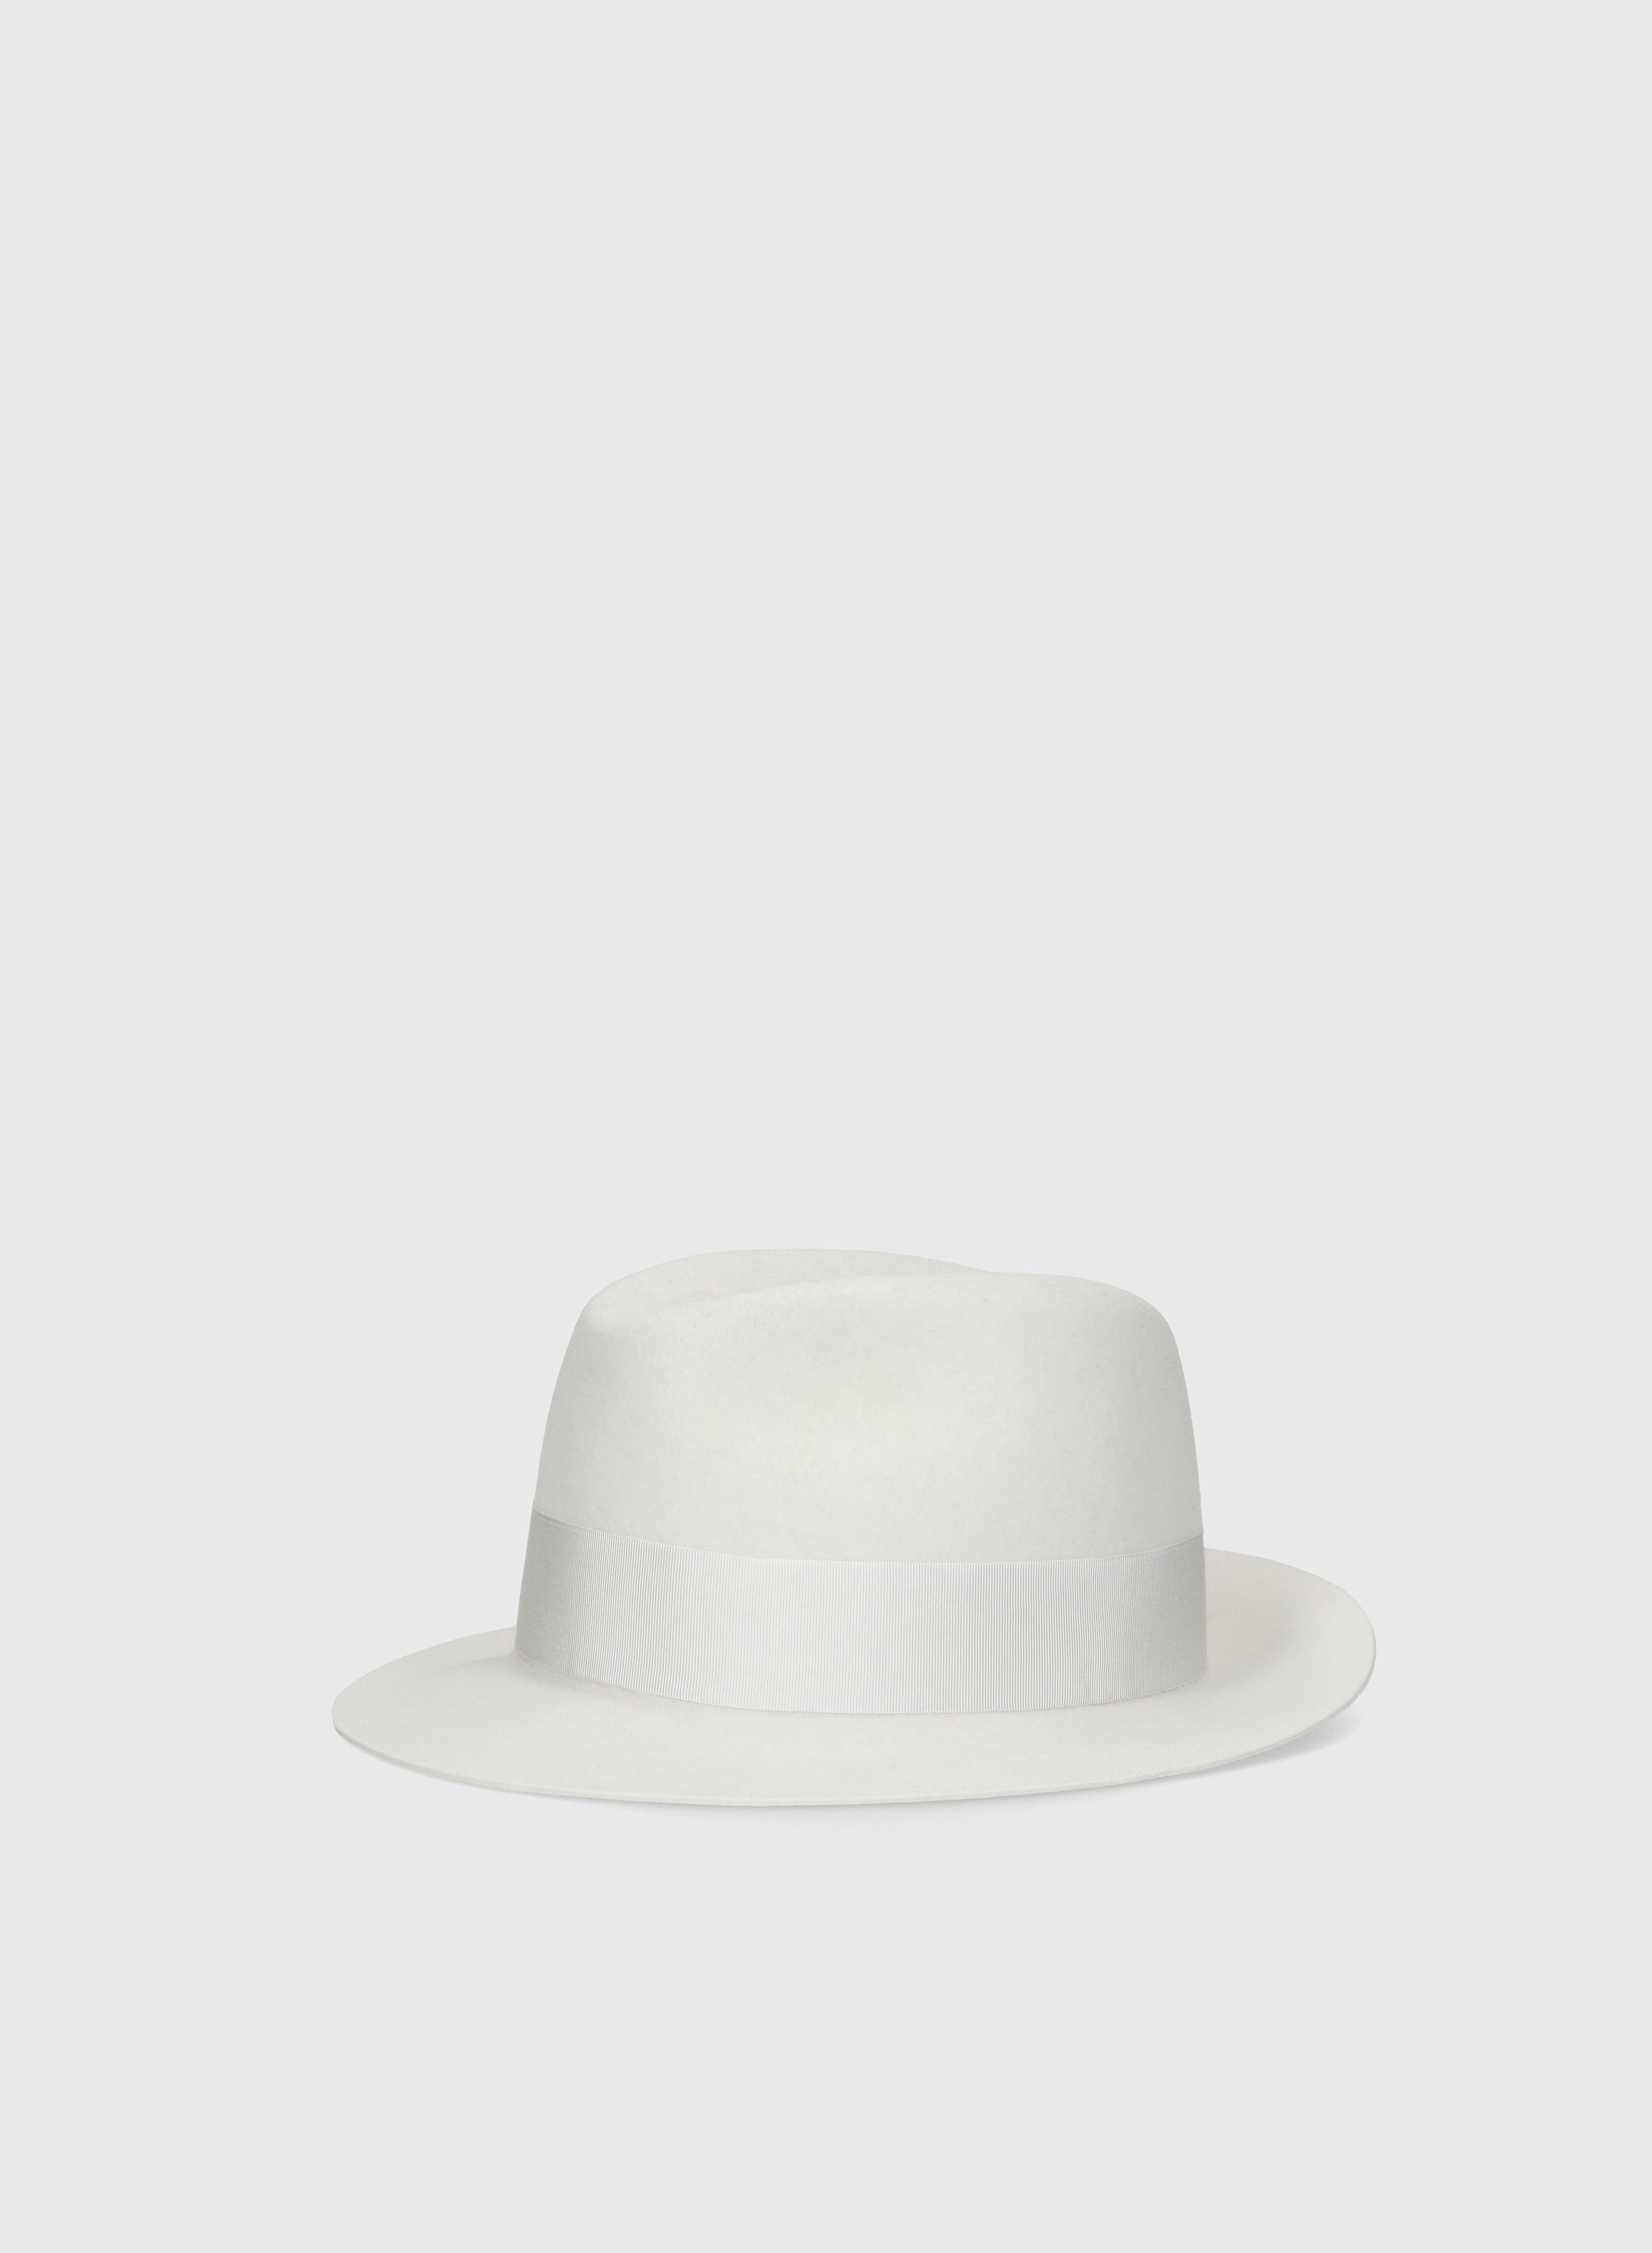 BORSALINO X ELIE SAAB Nila Hat